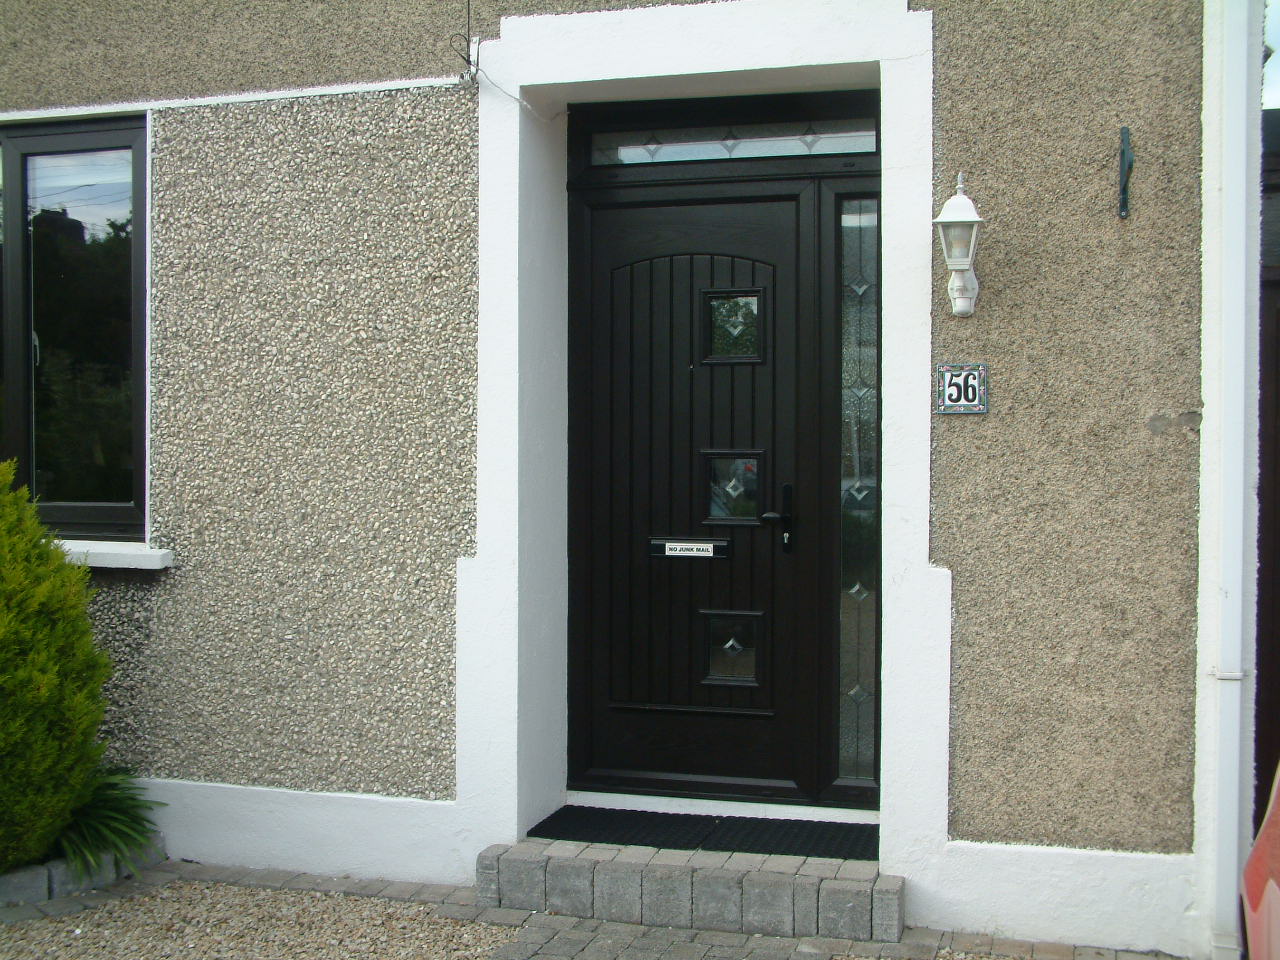 BLACK PALLADIO PARIS DOOR FITTED NY ASGARD WINDOWS IN DUBLIN 12.